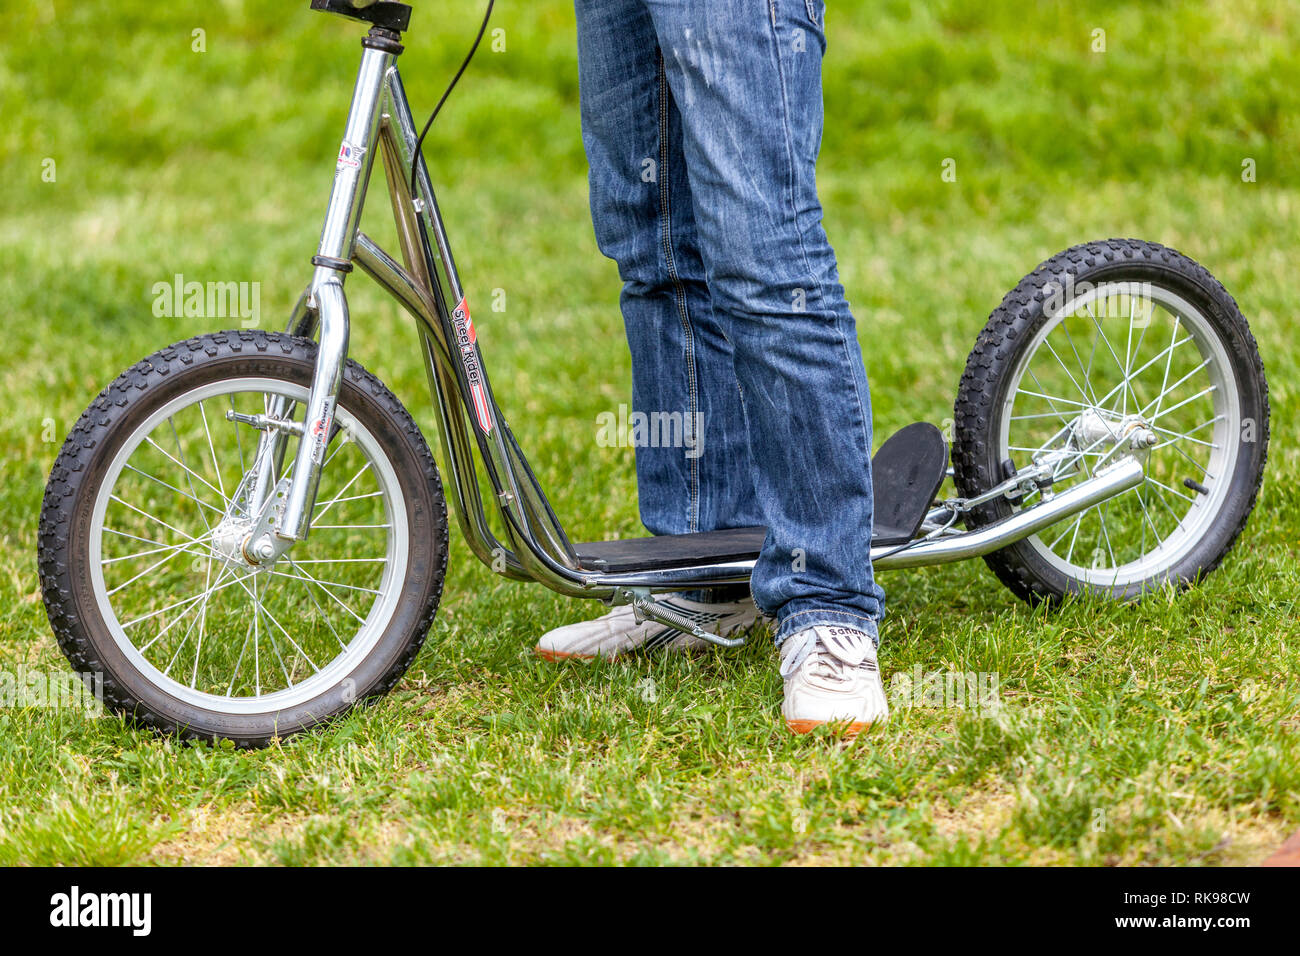 Kick bike hi-res stock photography and images - Alamy